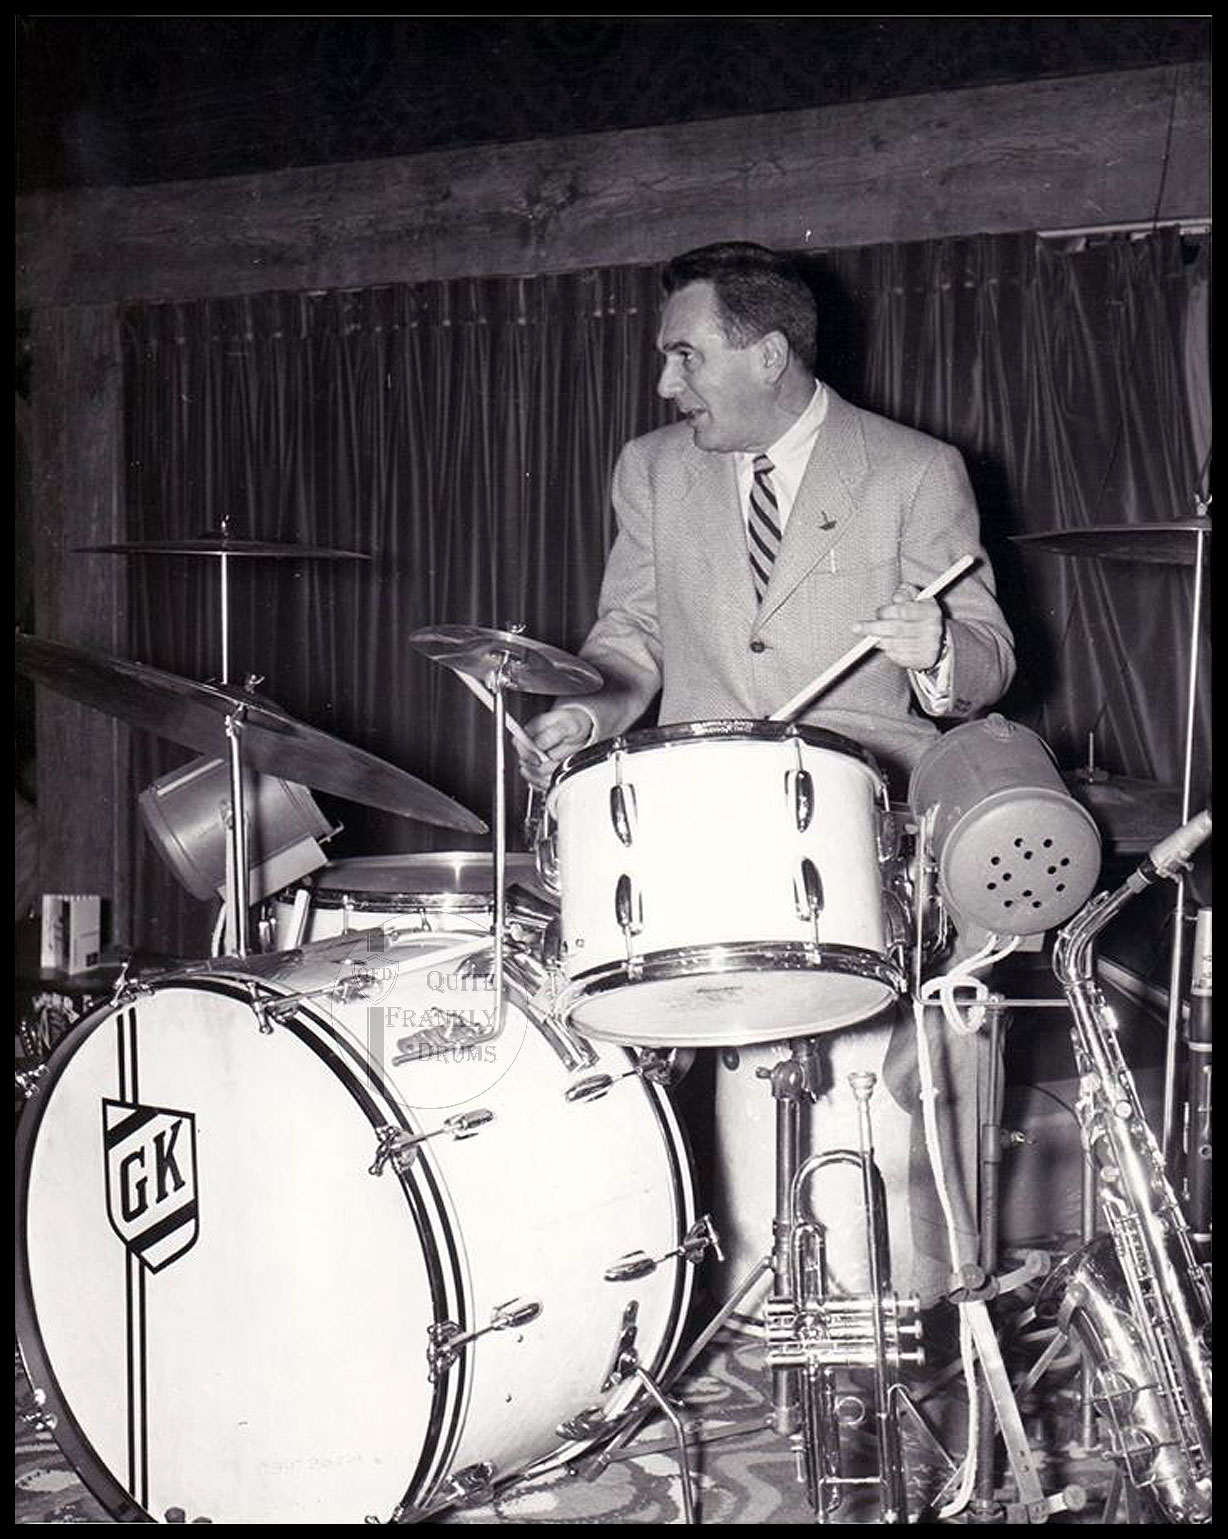 Gene Krupa seen here in 1954 on the same model Slingerland Radio King Outfit